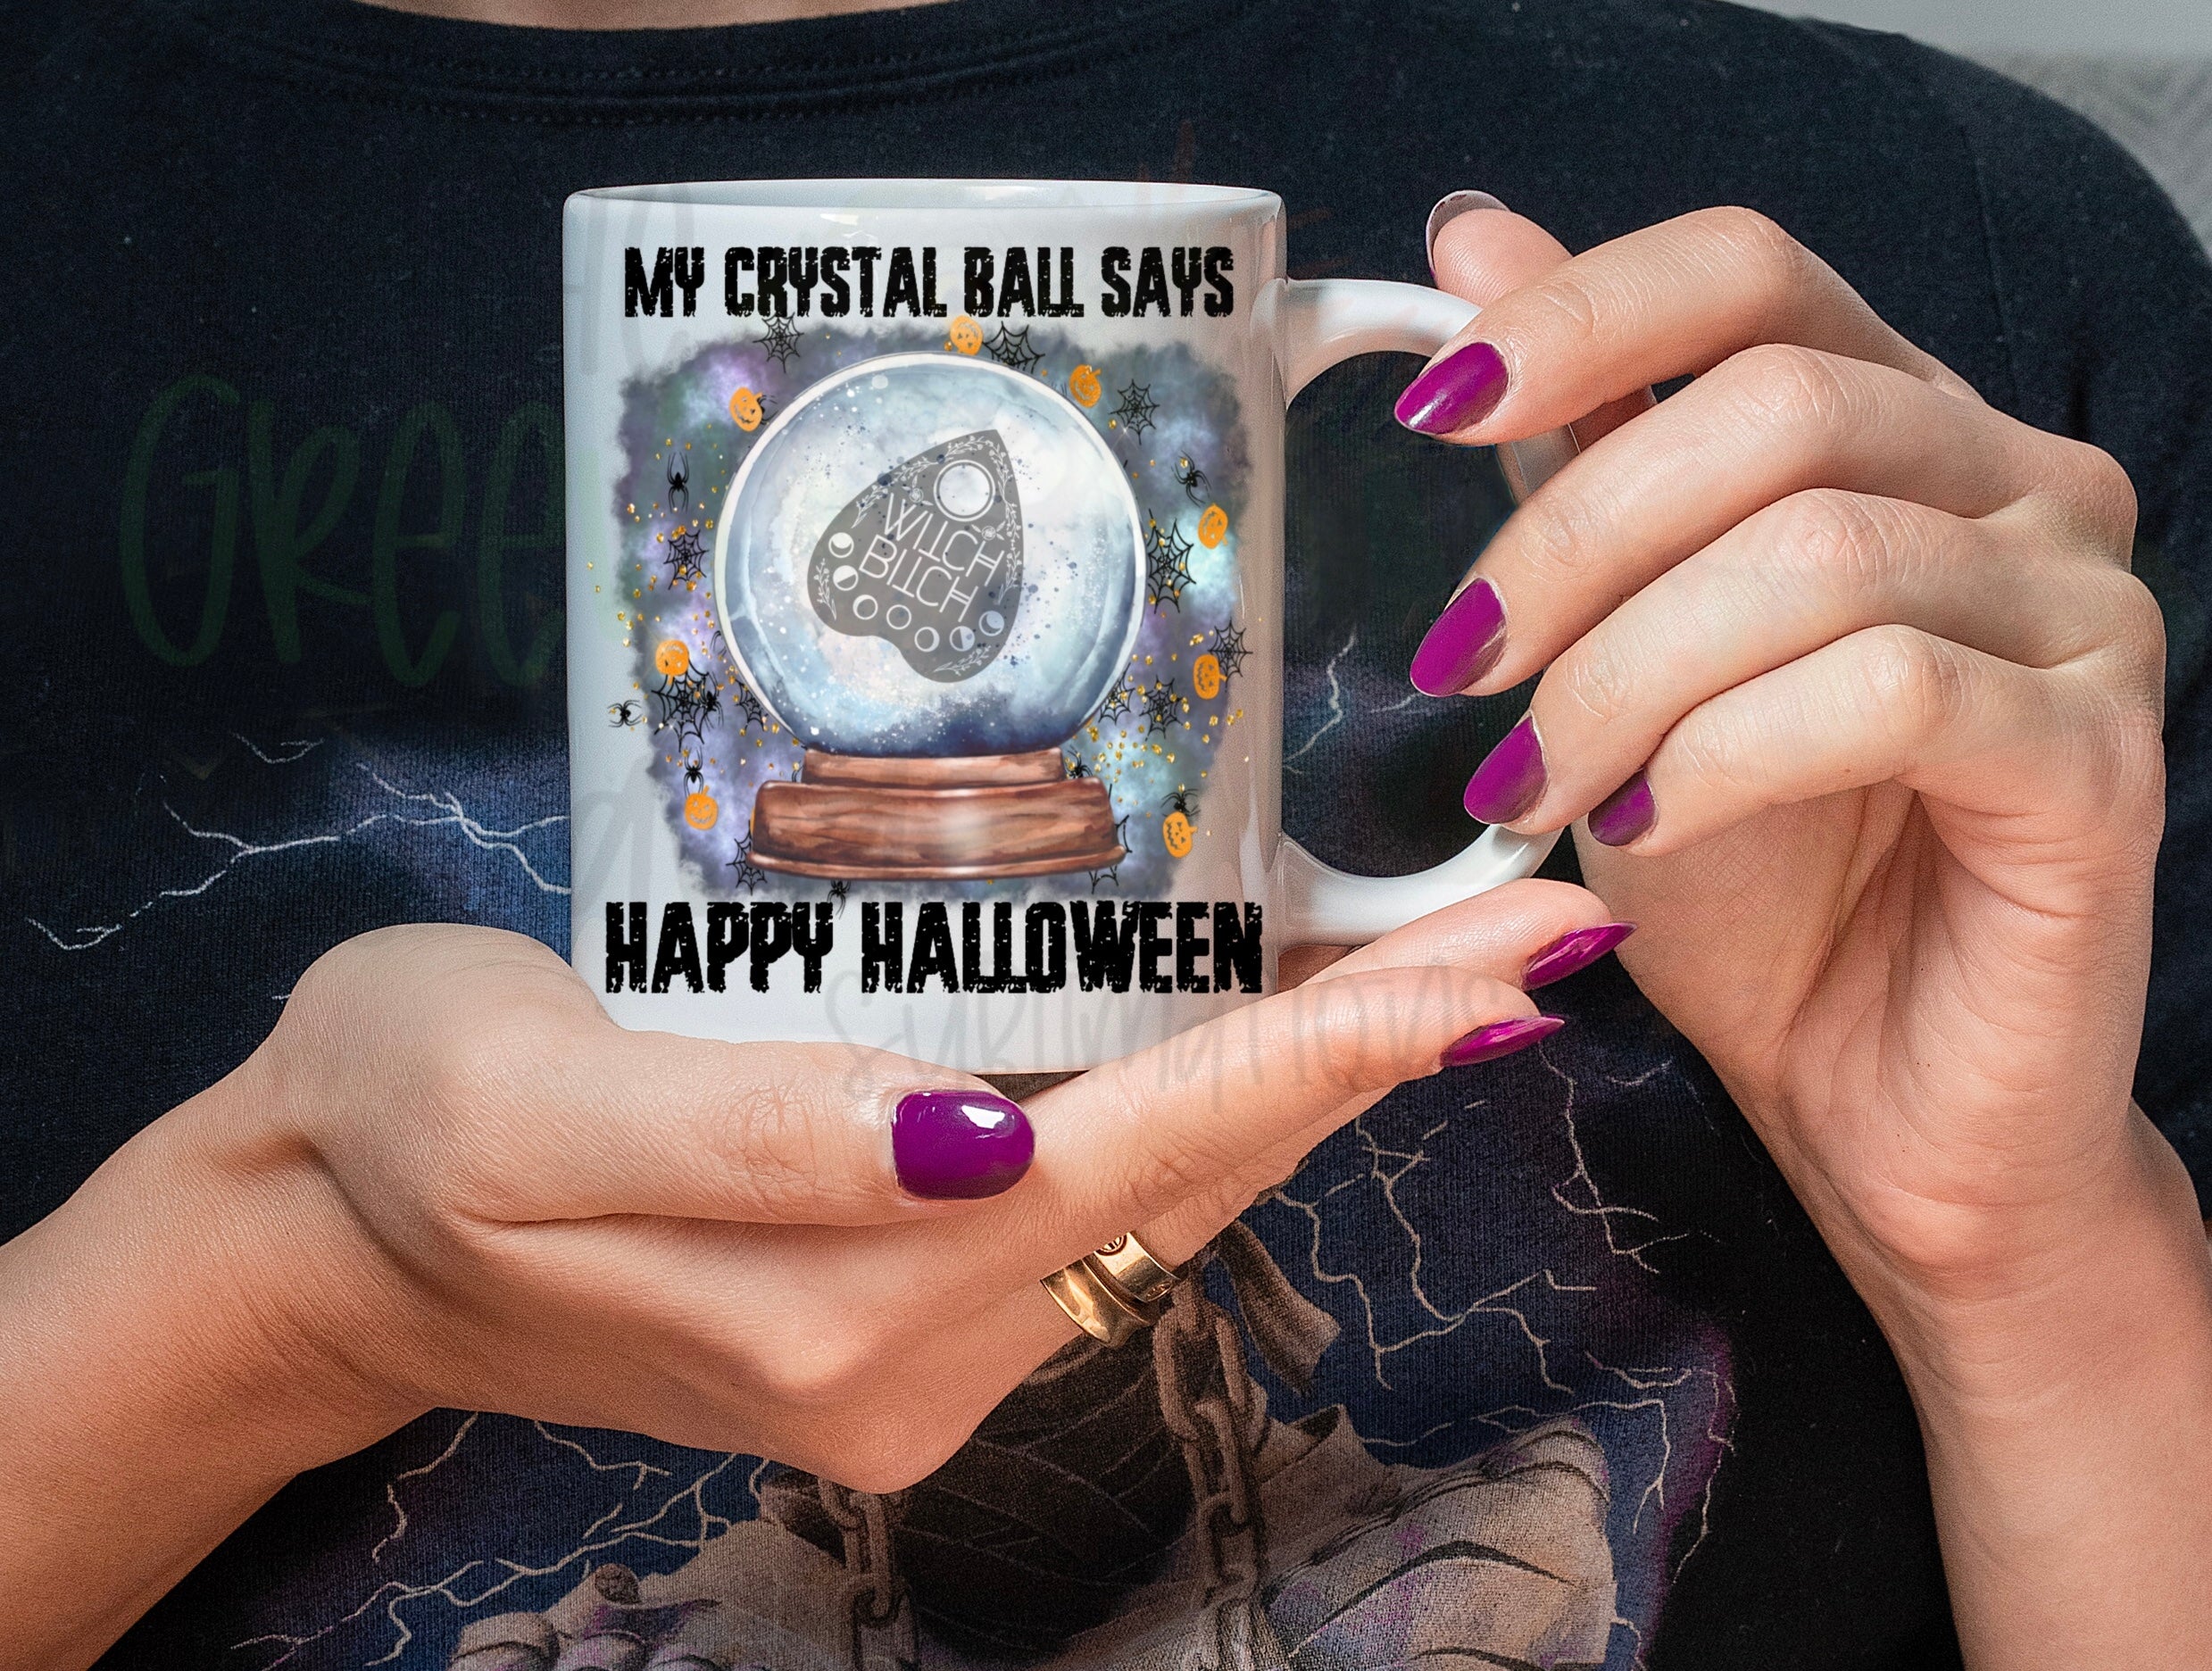 My crystal ball says Happy Halloween